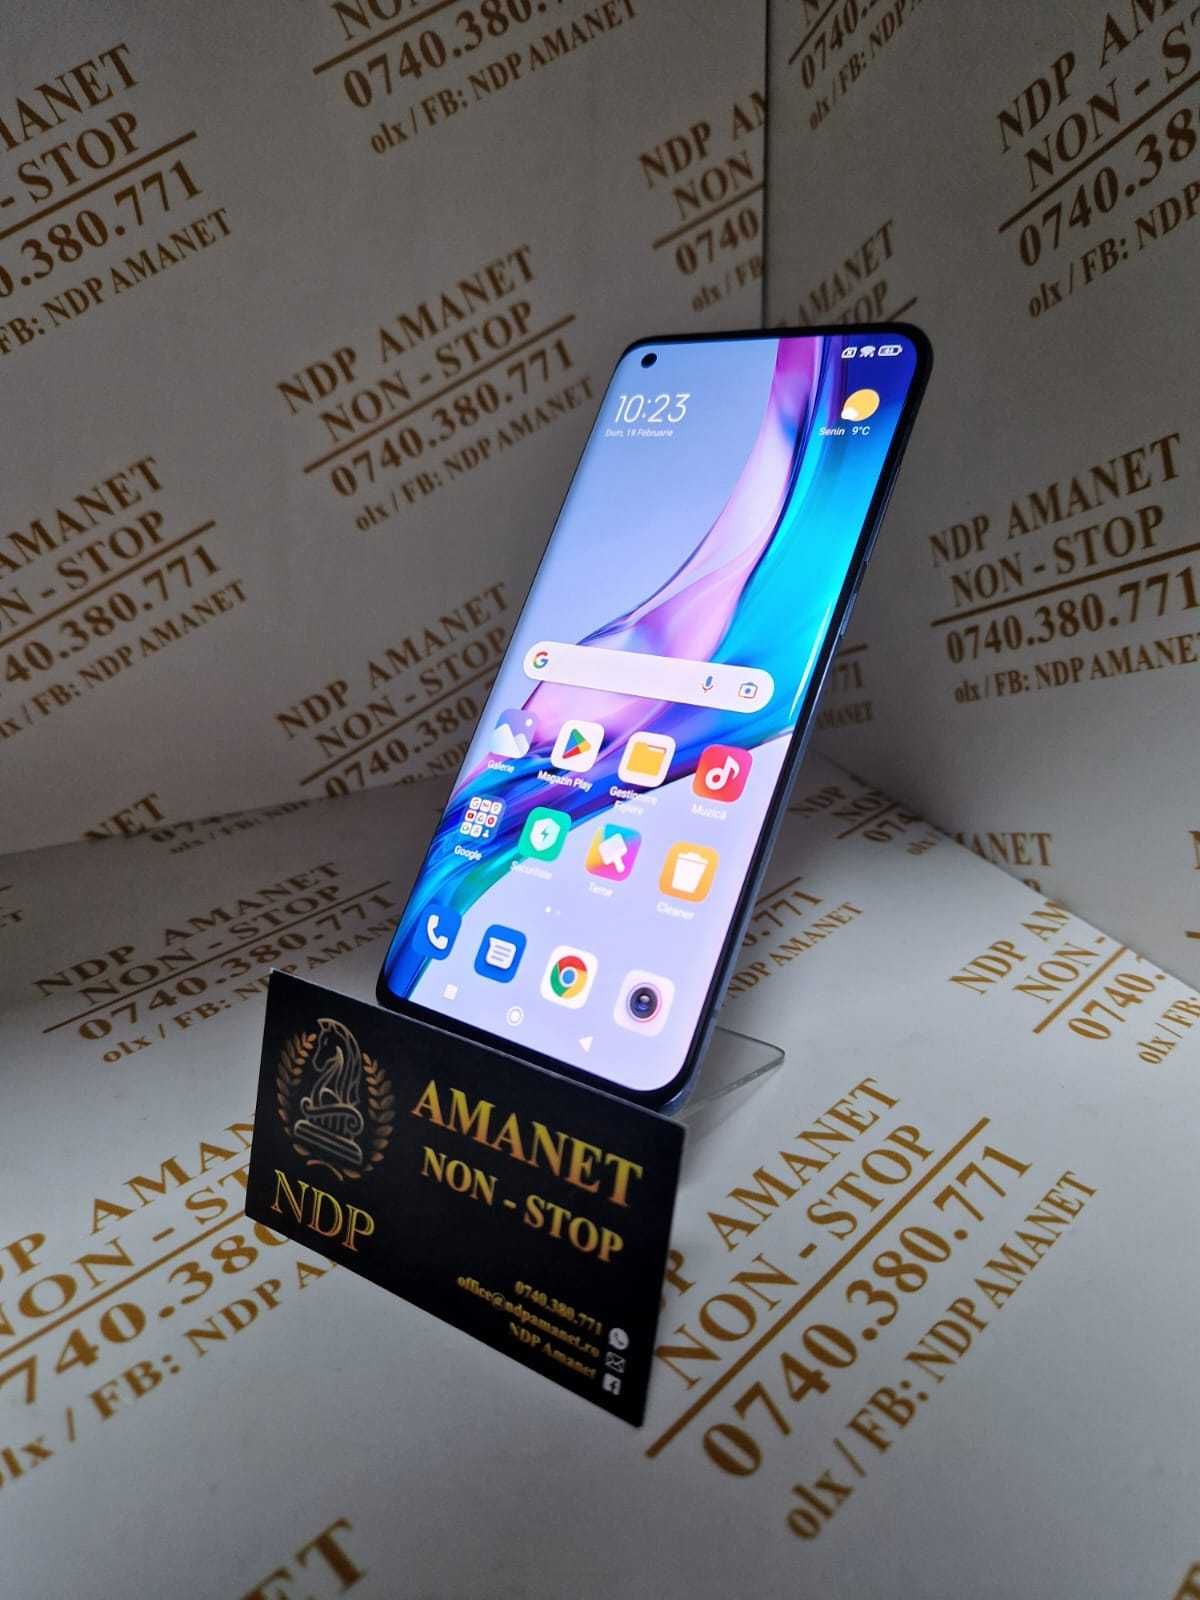 NDP Amanet Calea Mosilor 298 Xiaomi MI 10 5G (7764)